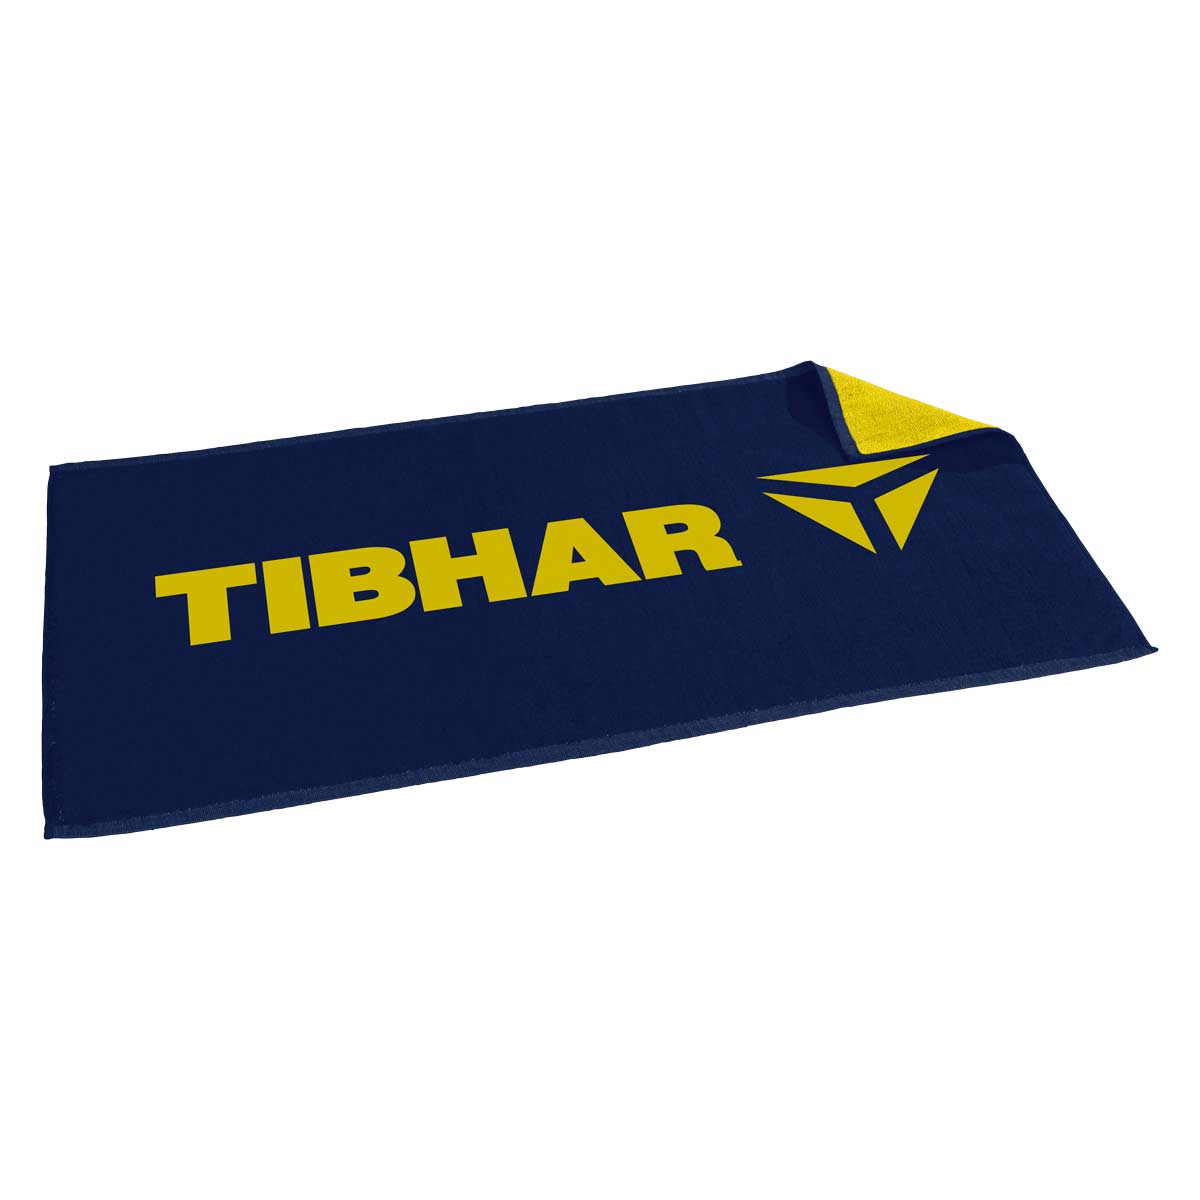 TIBHAR Handtuch T marine/gelb